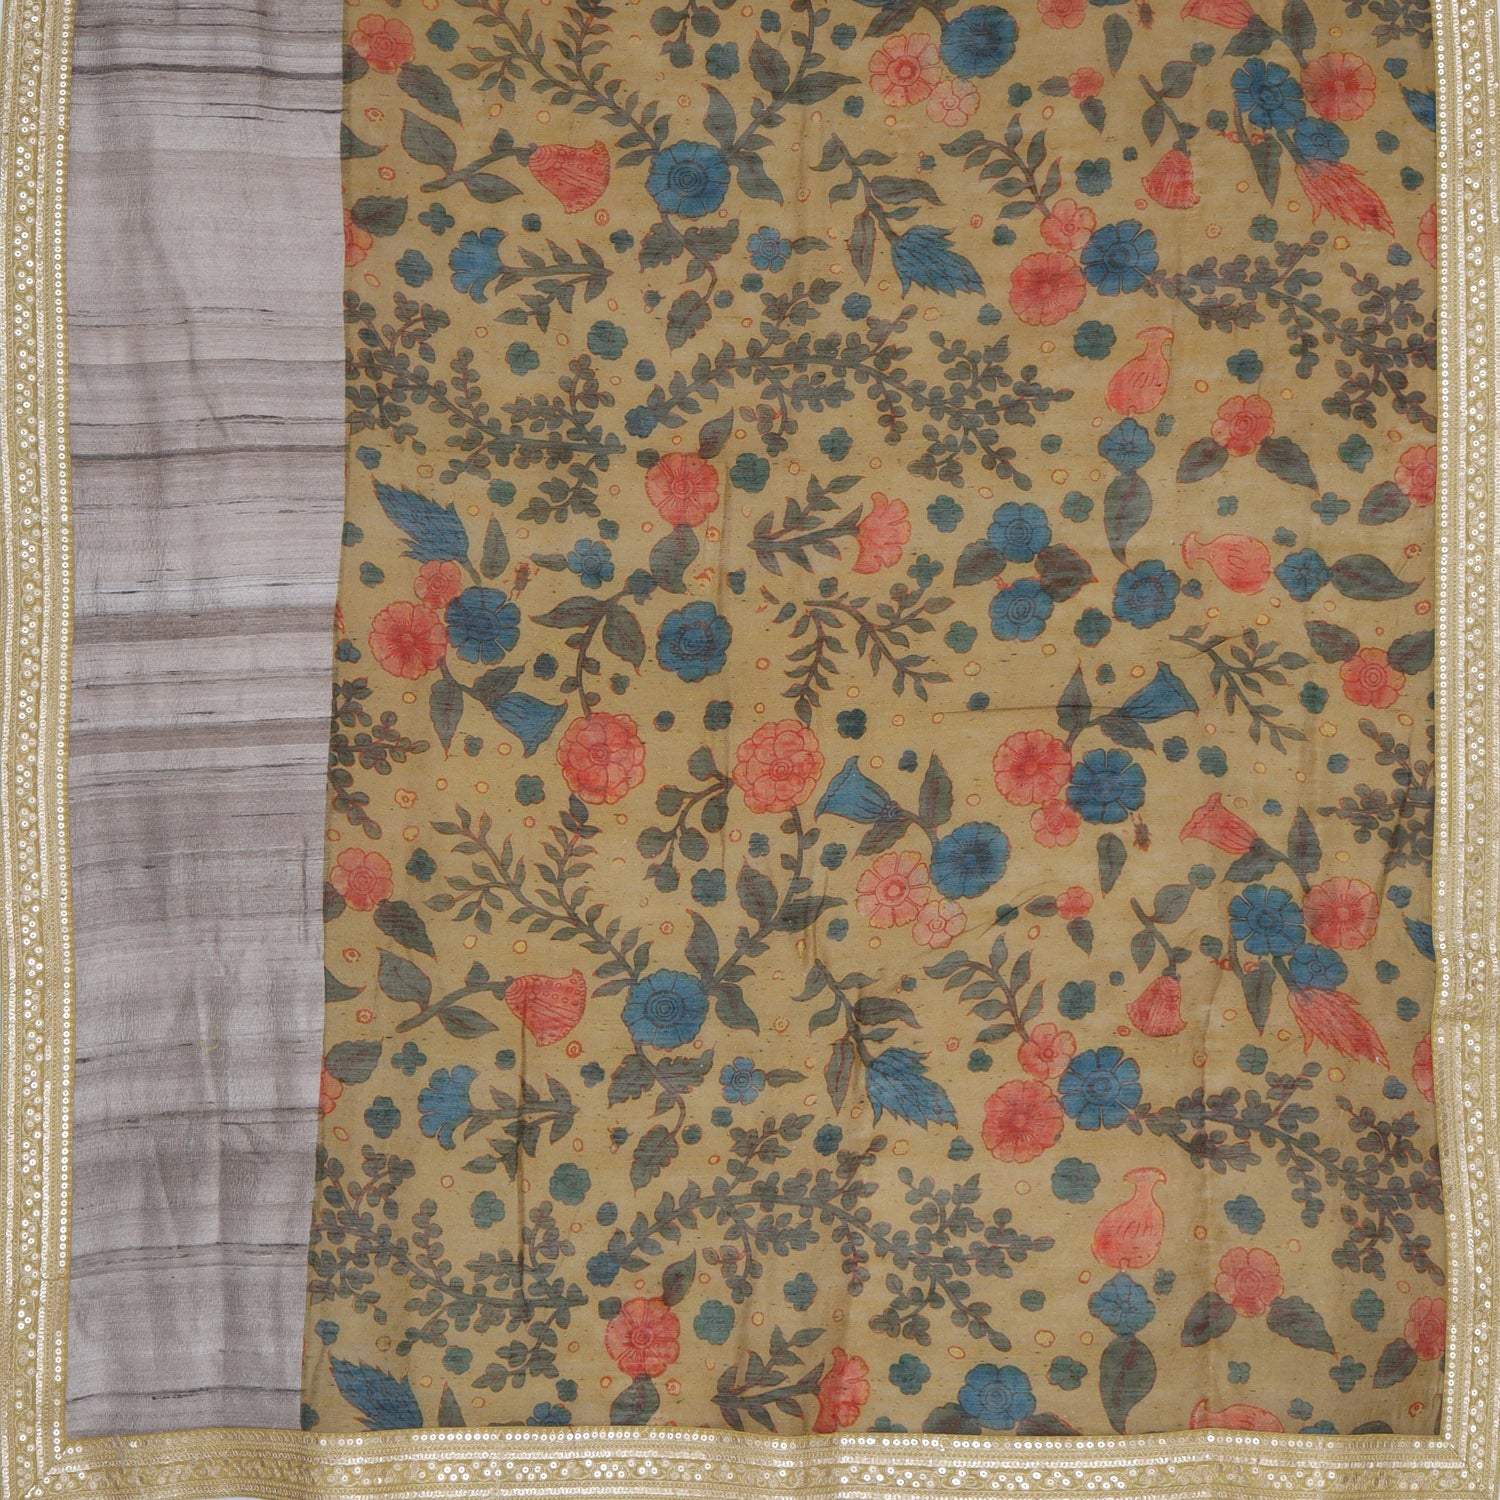 Mustard Yellow Printed Matka Kalamkari Silk Saree With Sequin Embroidery - Singhania's